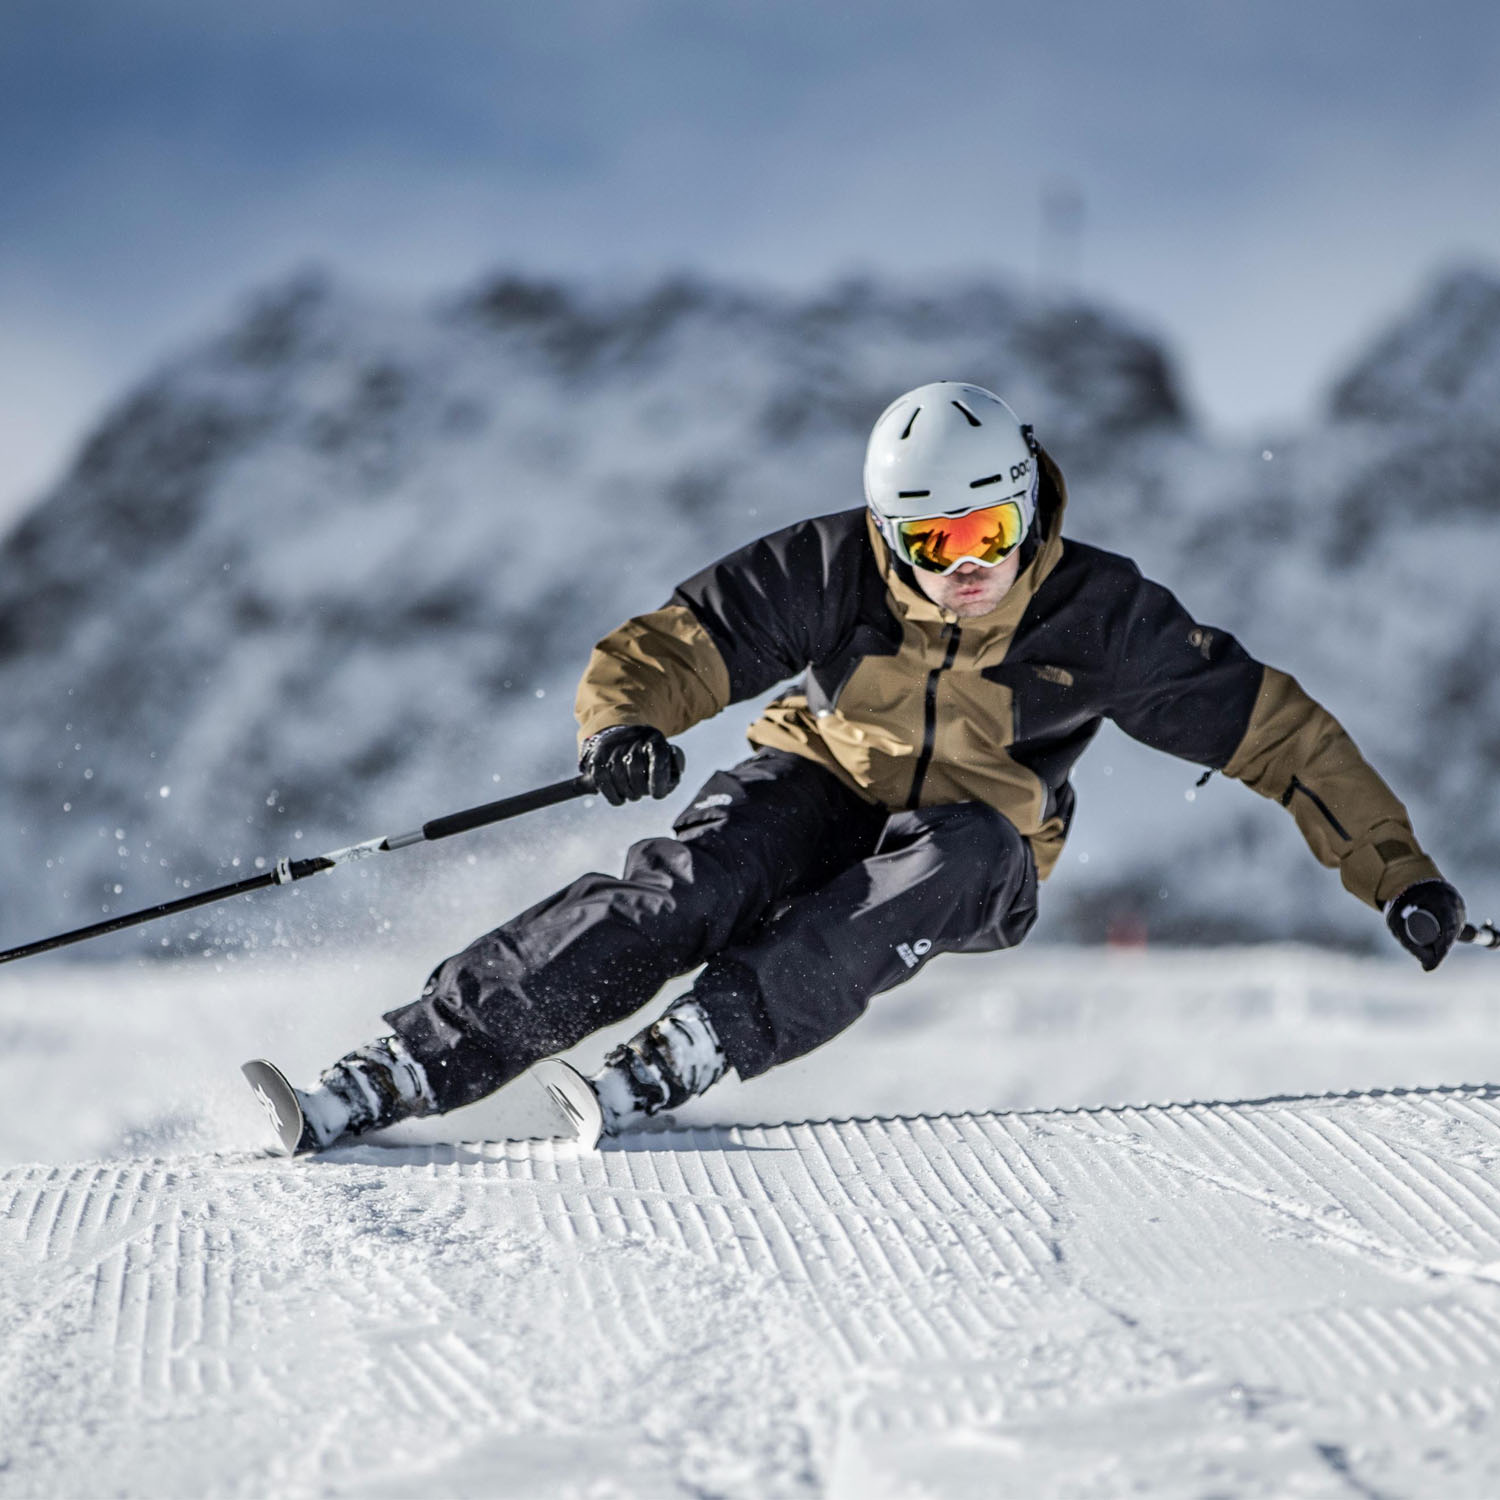 Горные лыжи с креплениями MAJESTY Adventure + PRW 11 GW brake 85 [G] Black/White